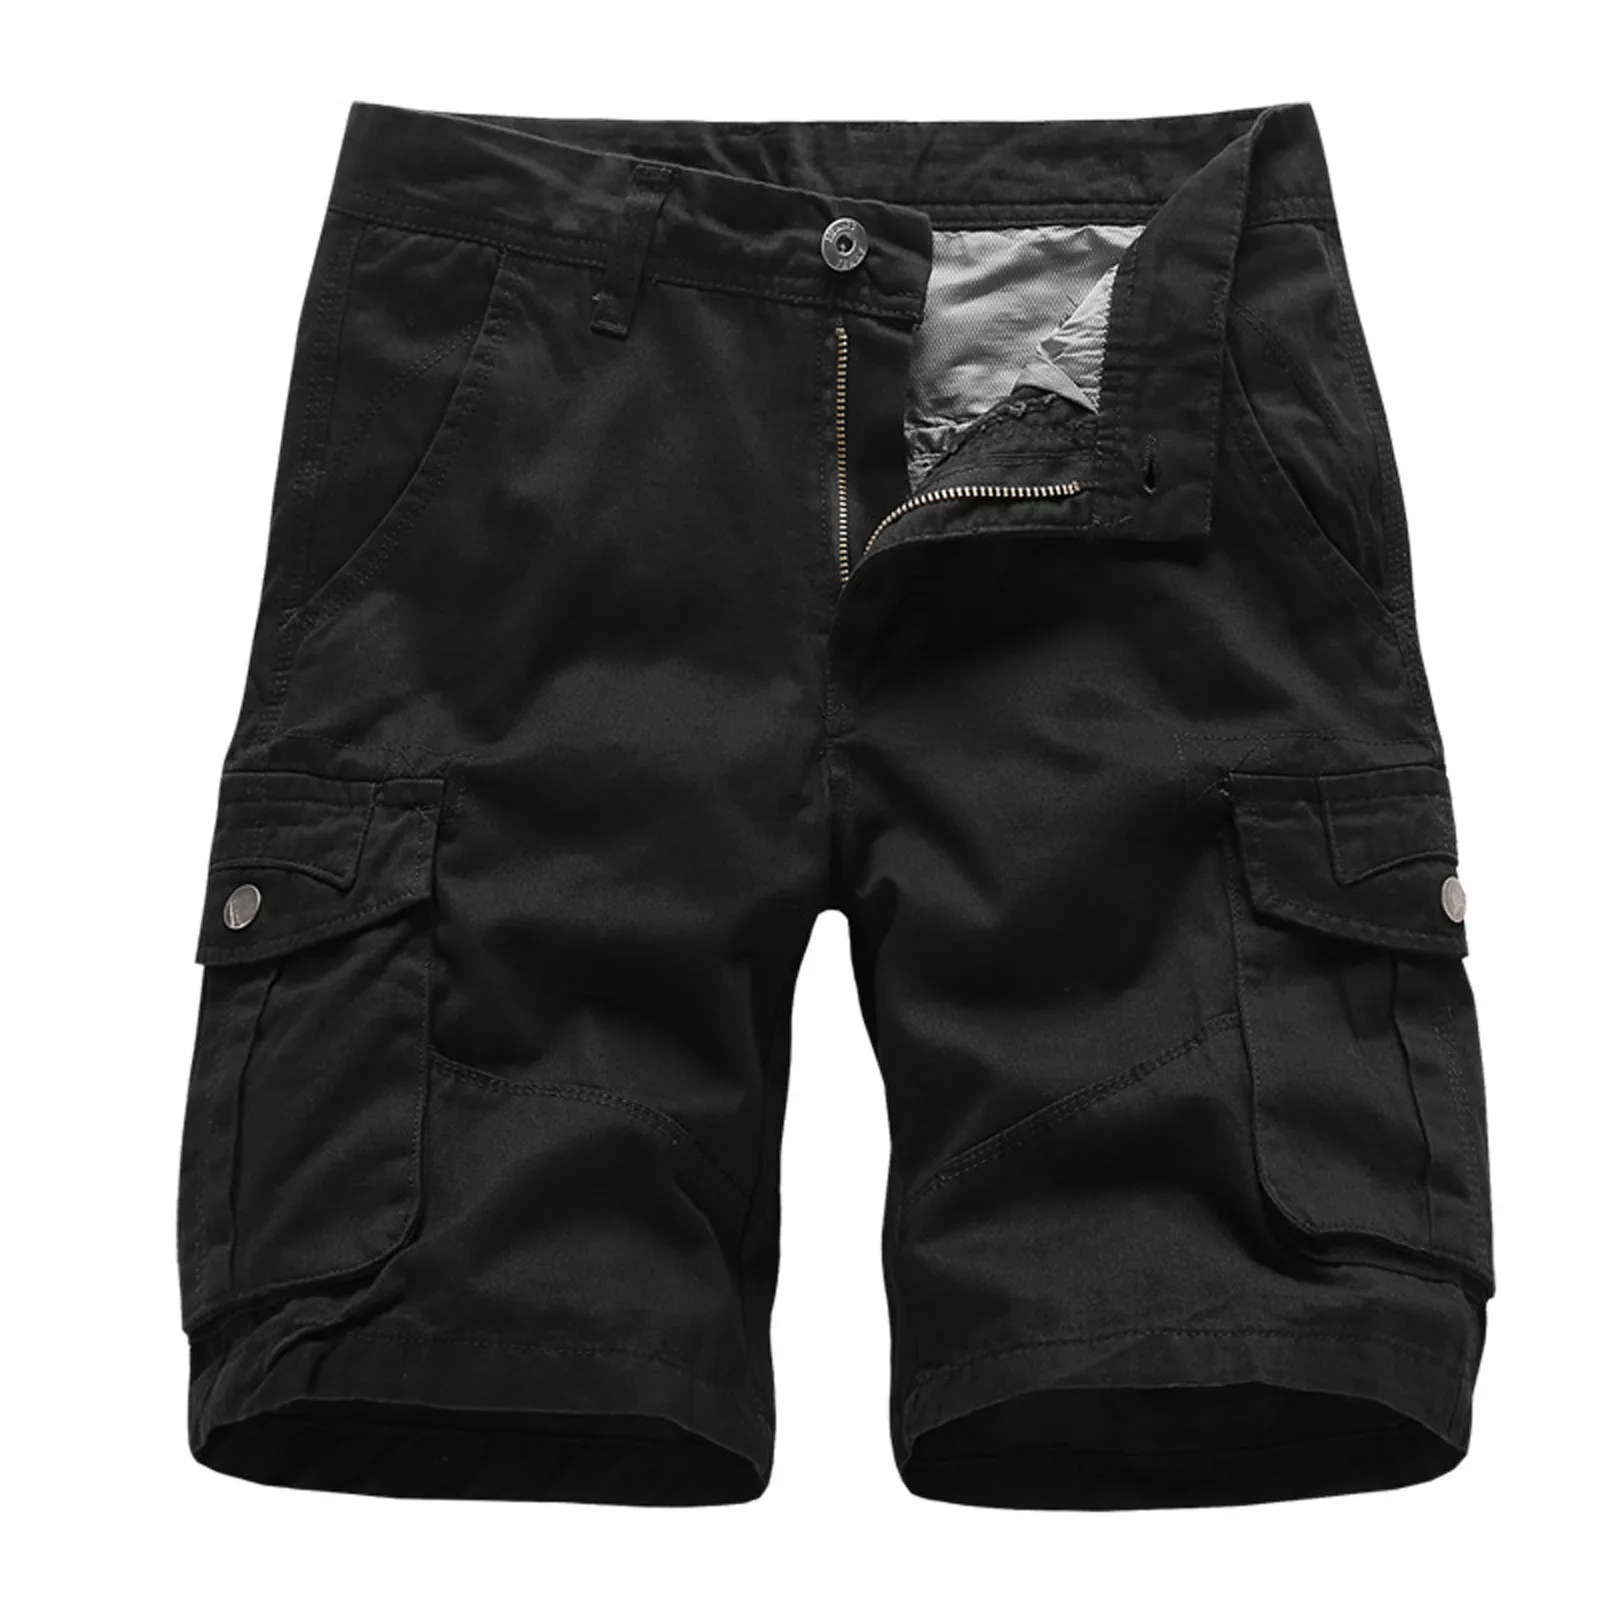 Men's Casual Shorts Solid Color Cargo Shorts Pants Man Outdoors Pocket Beach Work Shorts Summer Beach Wear